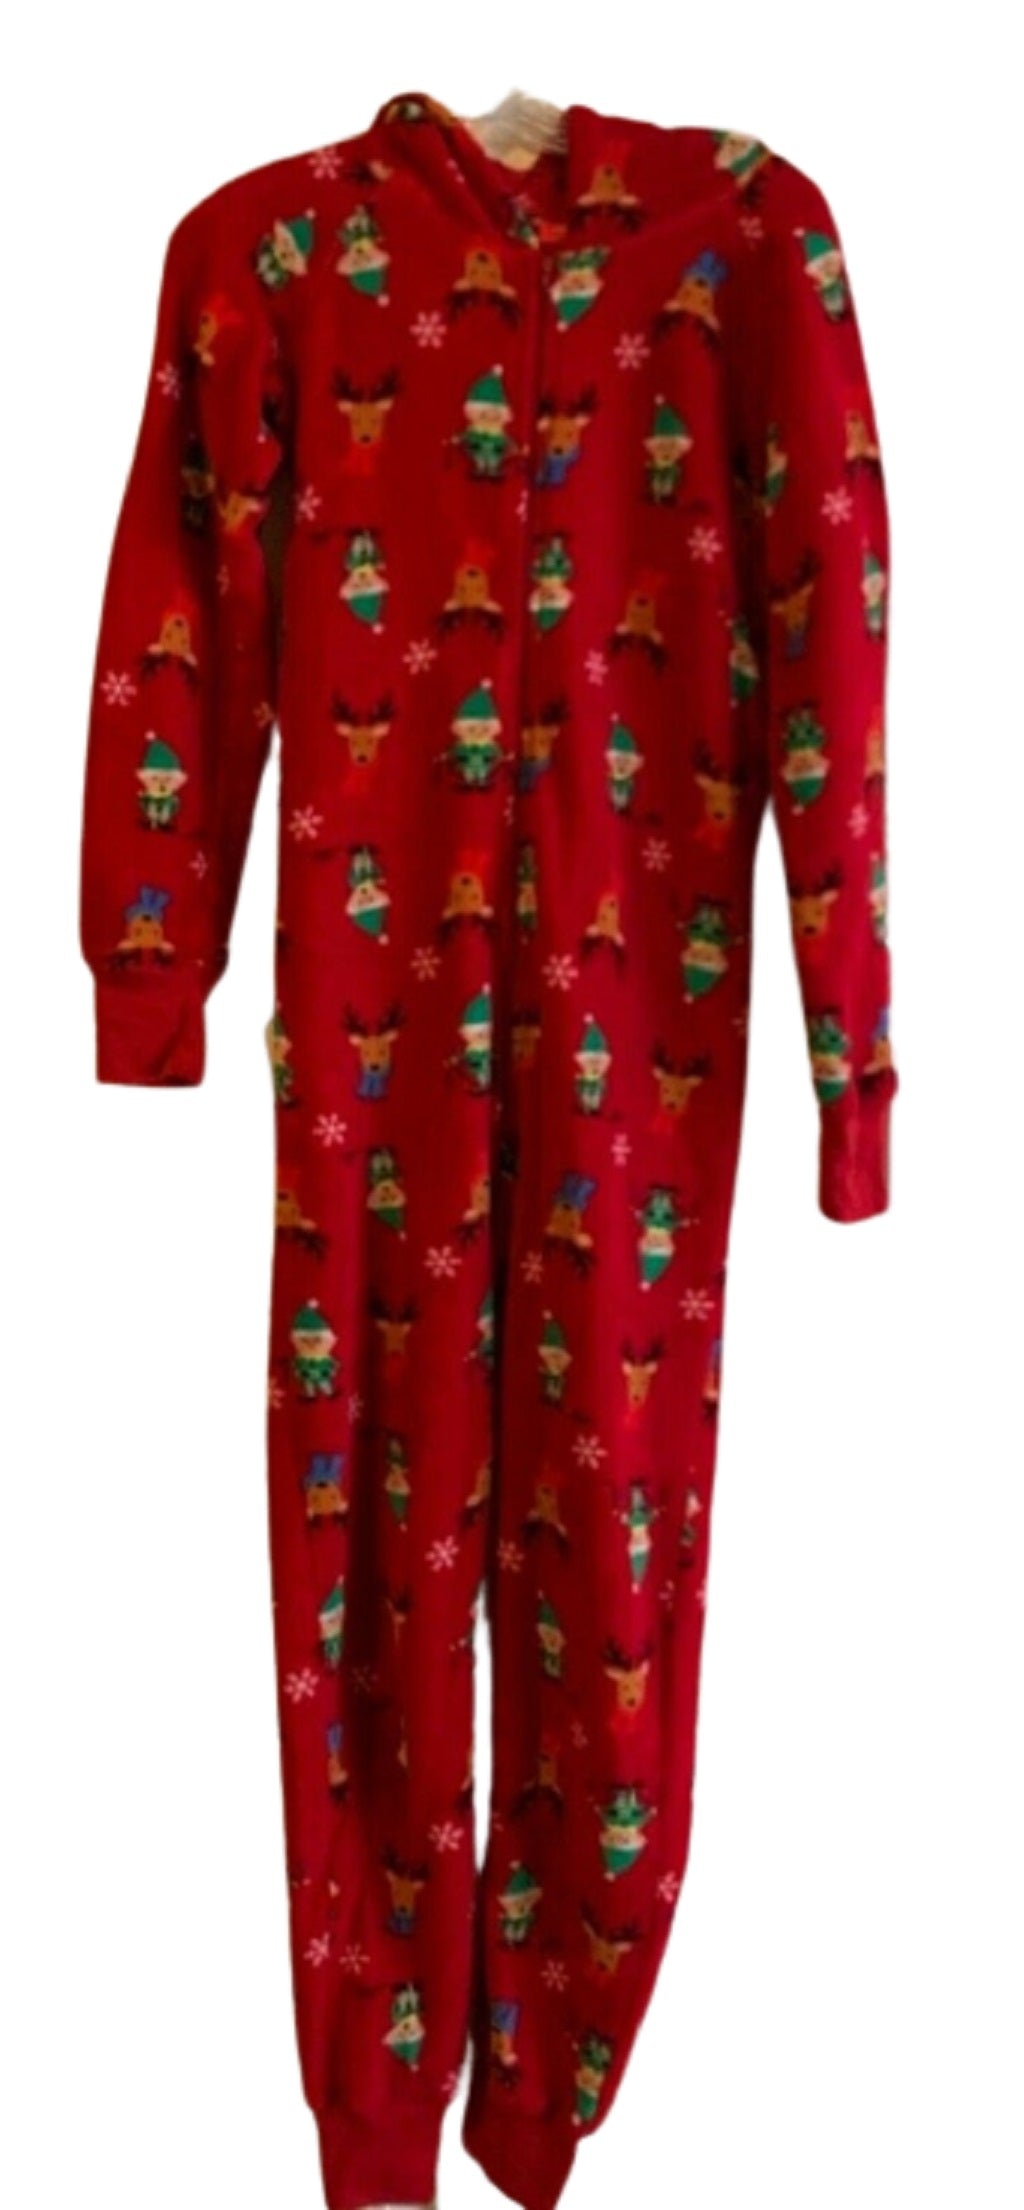 Family Pajamas Womens Hooded Holiday Reindeer Elf Christmas Pajama Onesie